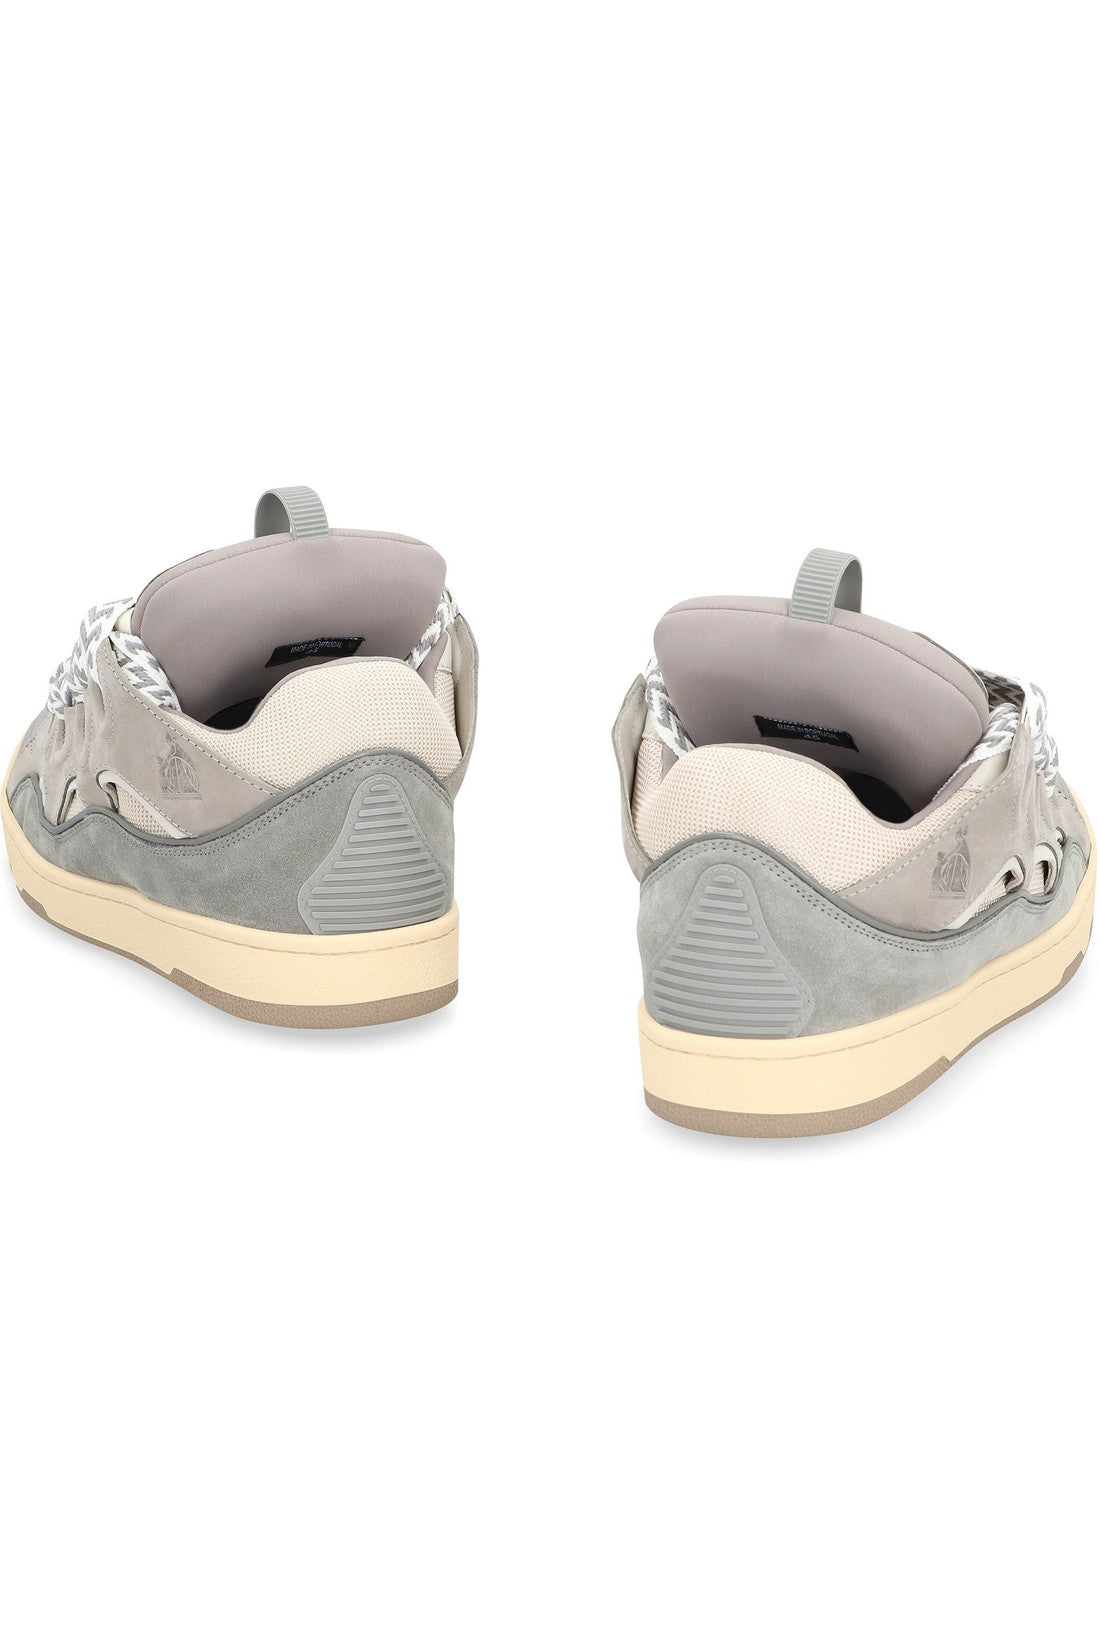 Lanvin-OUTLET-SALE-Curb leather sneakers-ARCHIVIST